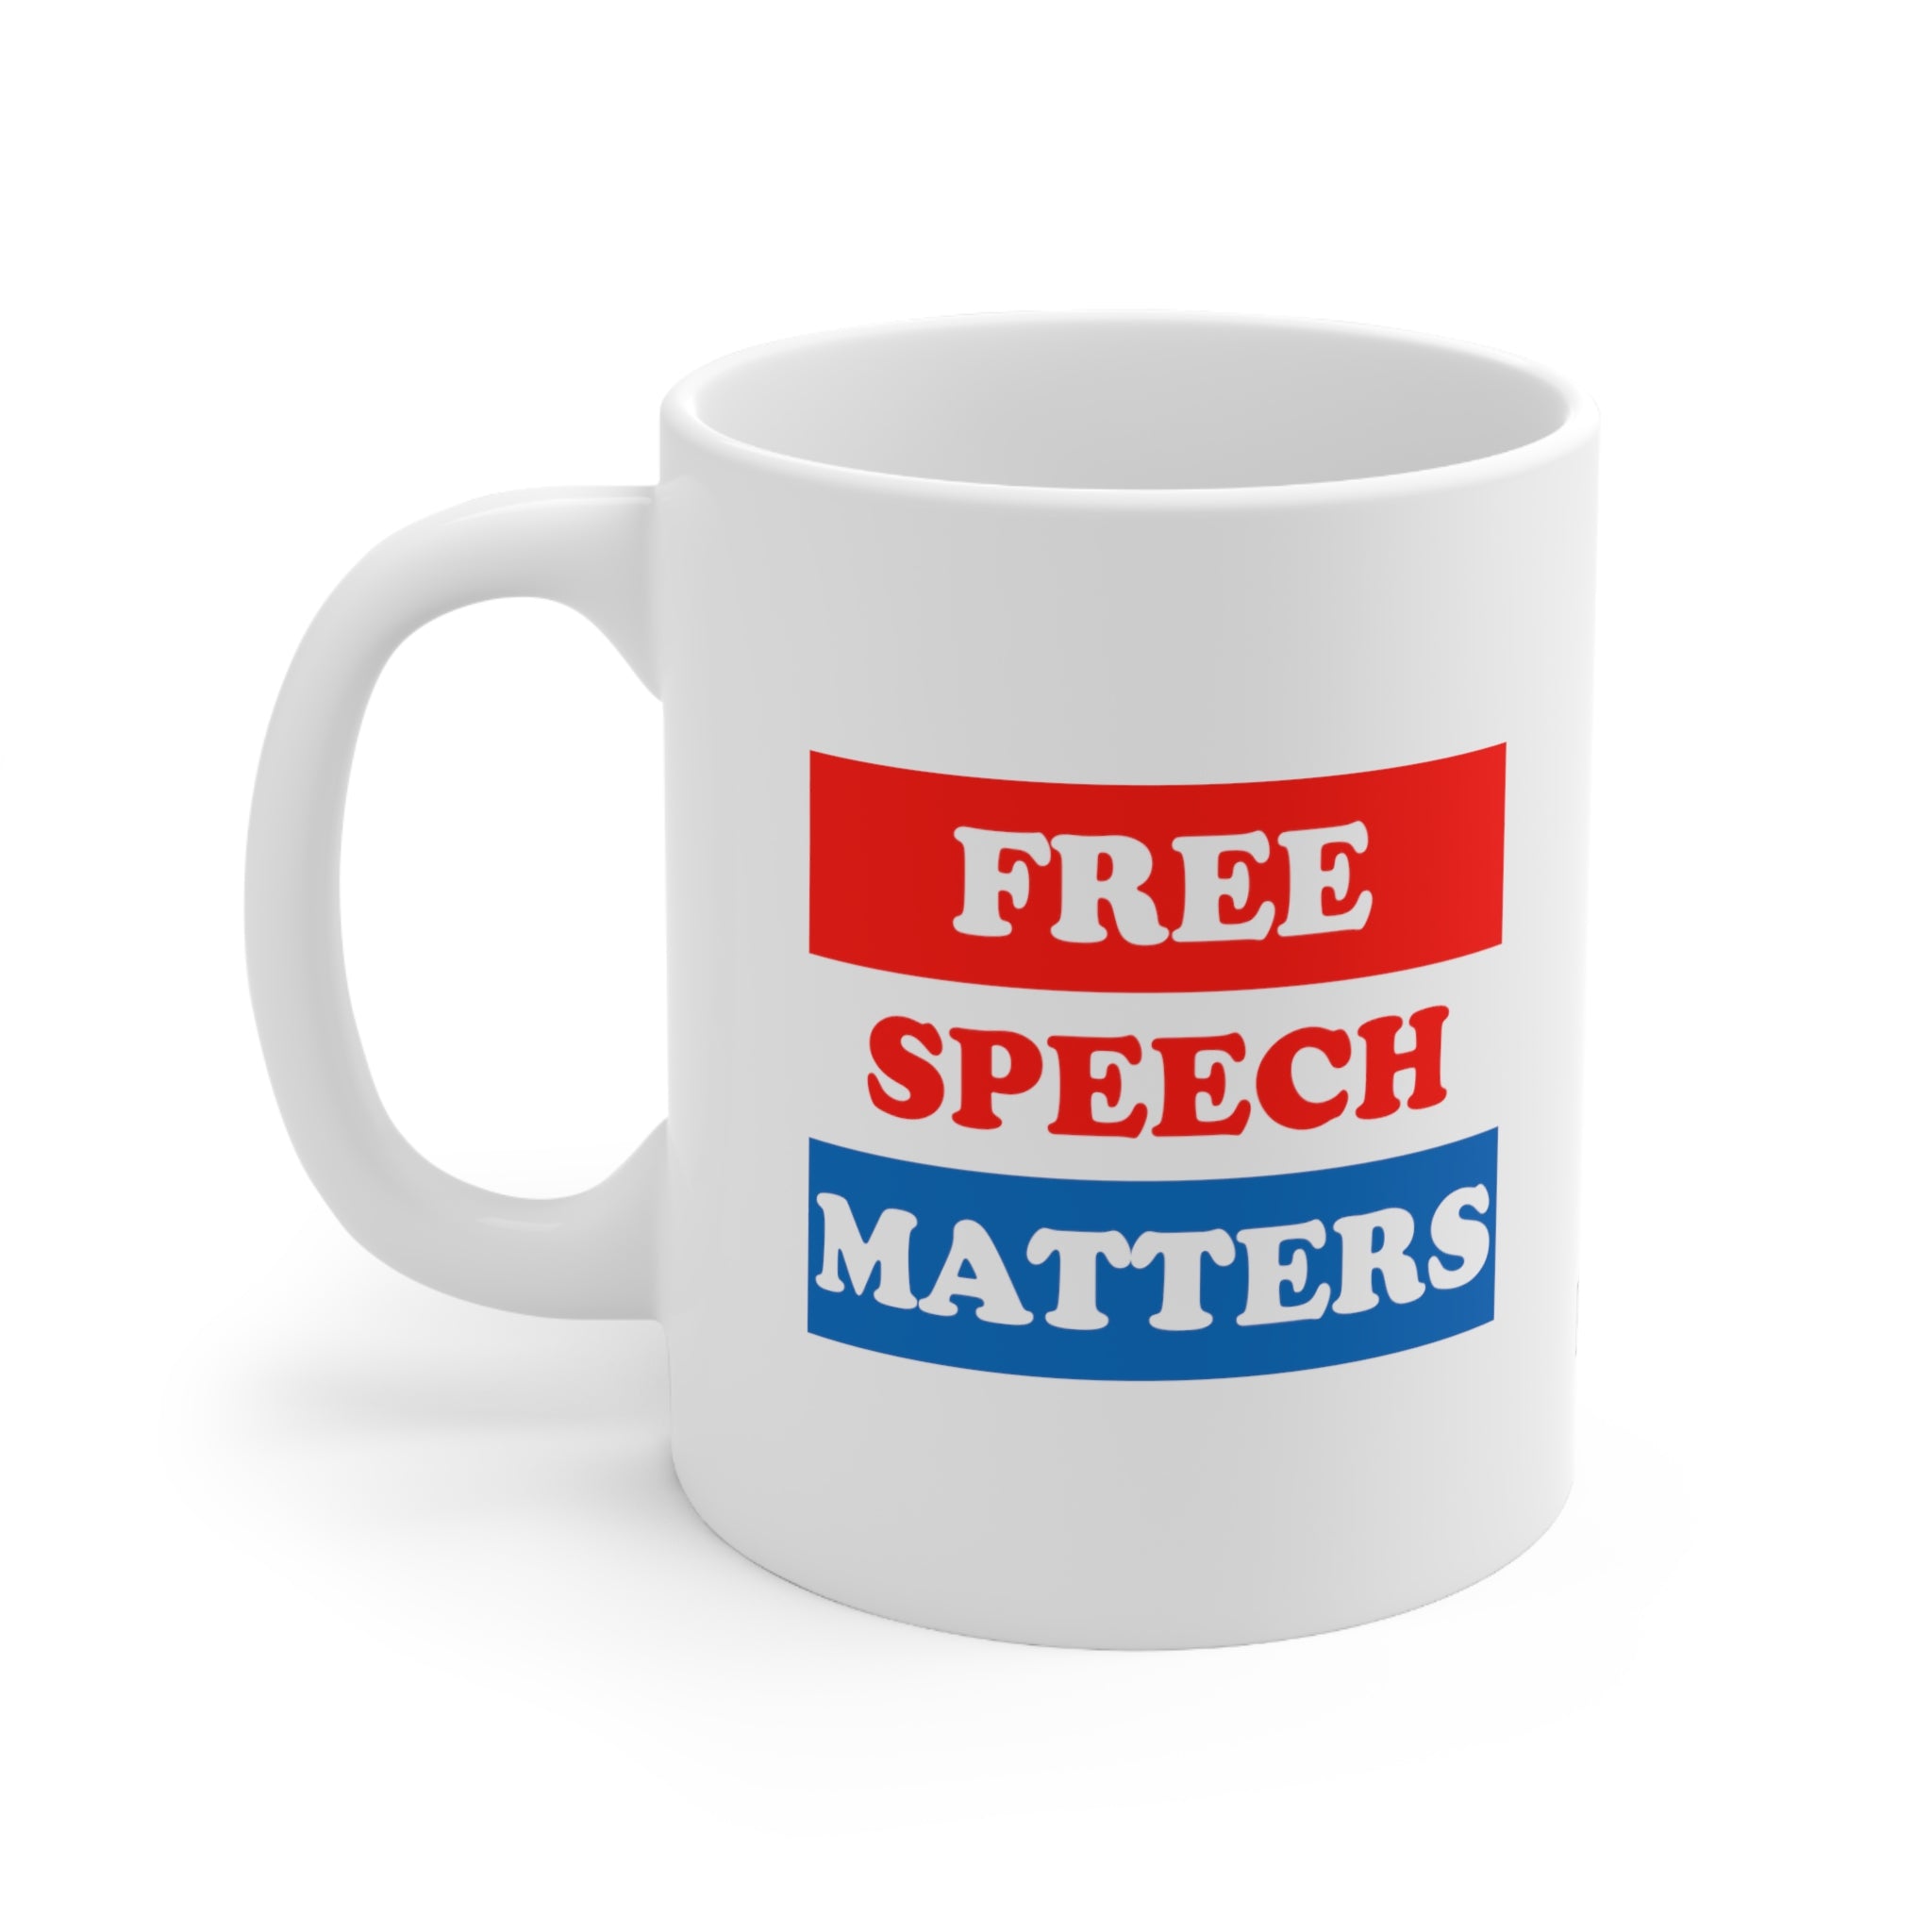 Free Speech Matters - Ceramic Mug 11oz